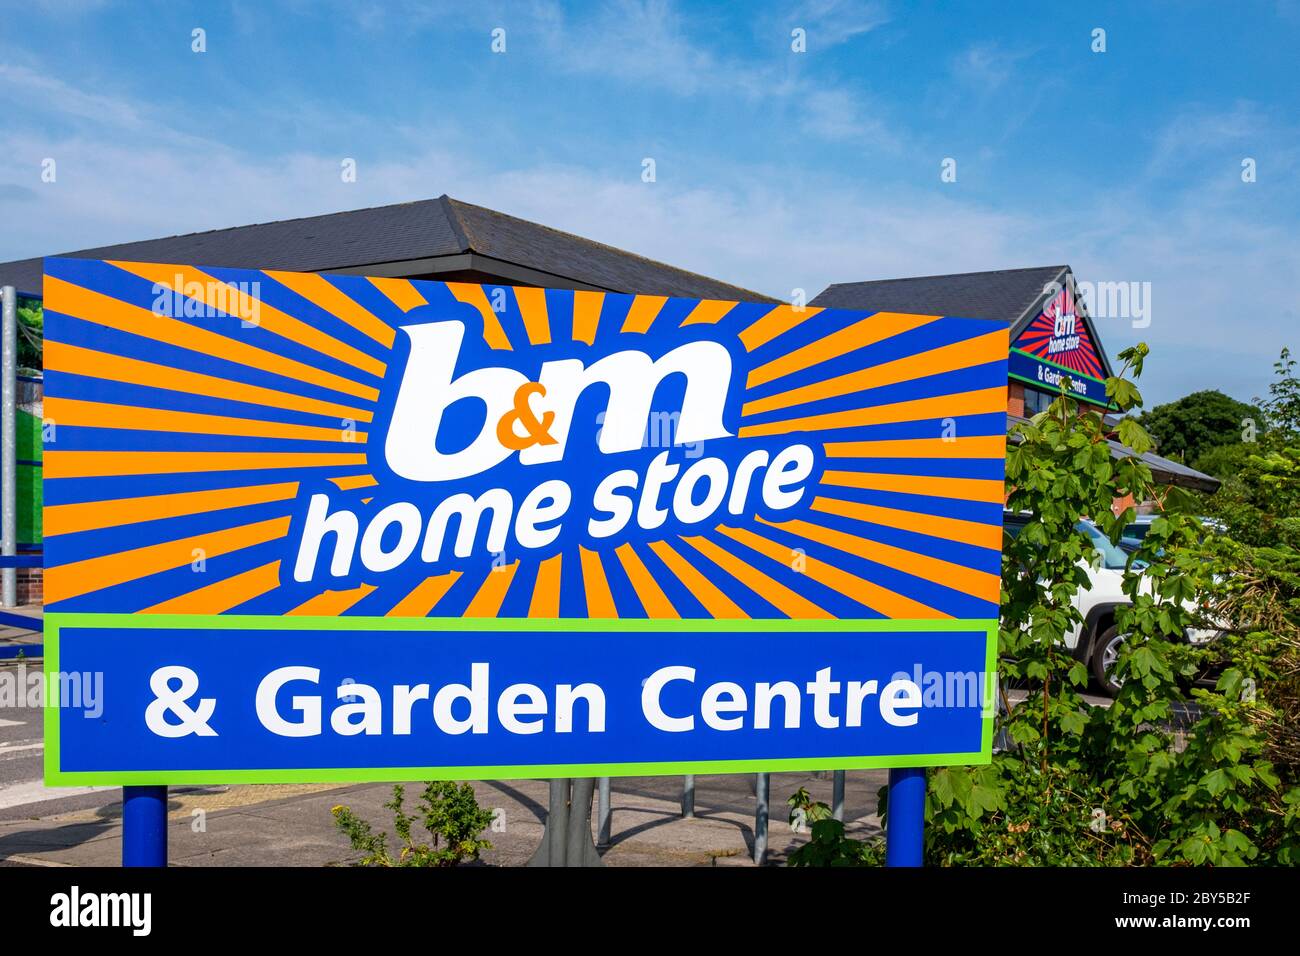 B M Home Store Garden Centre Sign Stock Photo Alamy